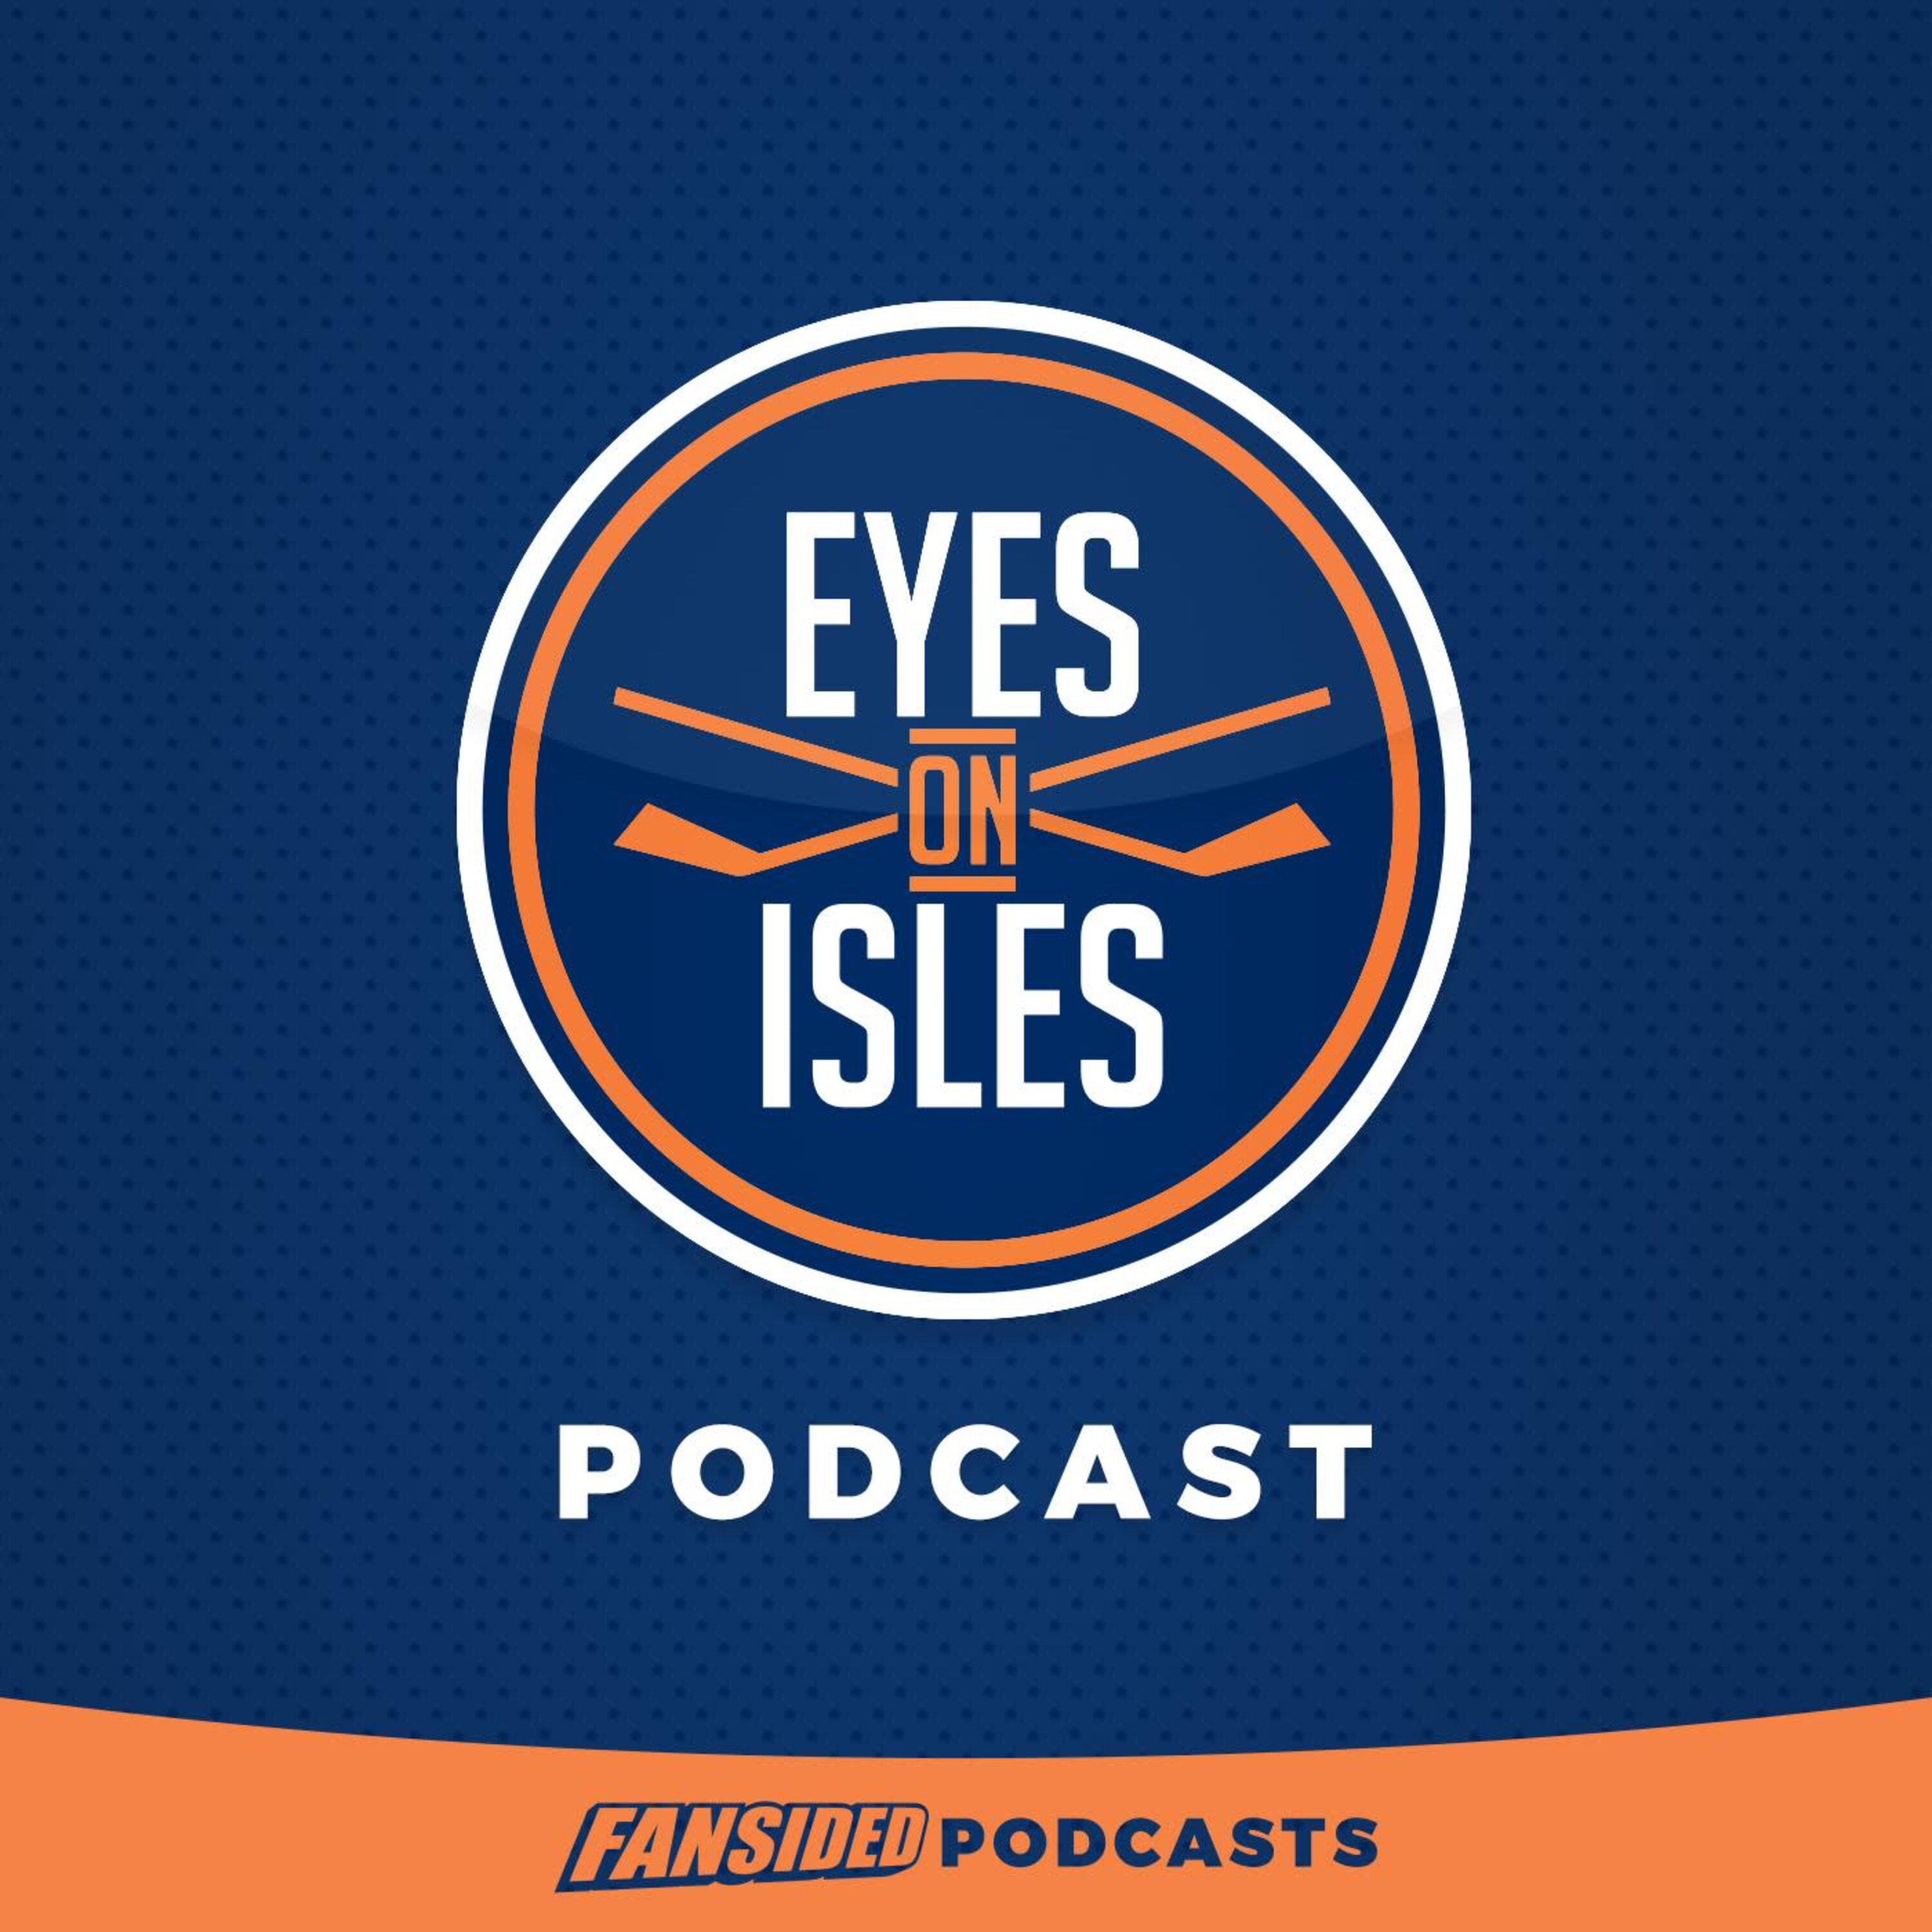 Eye injury forces Islanders' Johnny Boychuk to call it a career